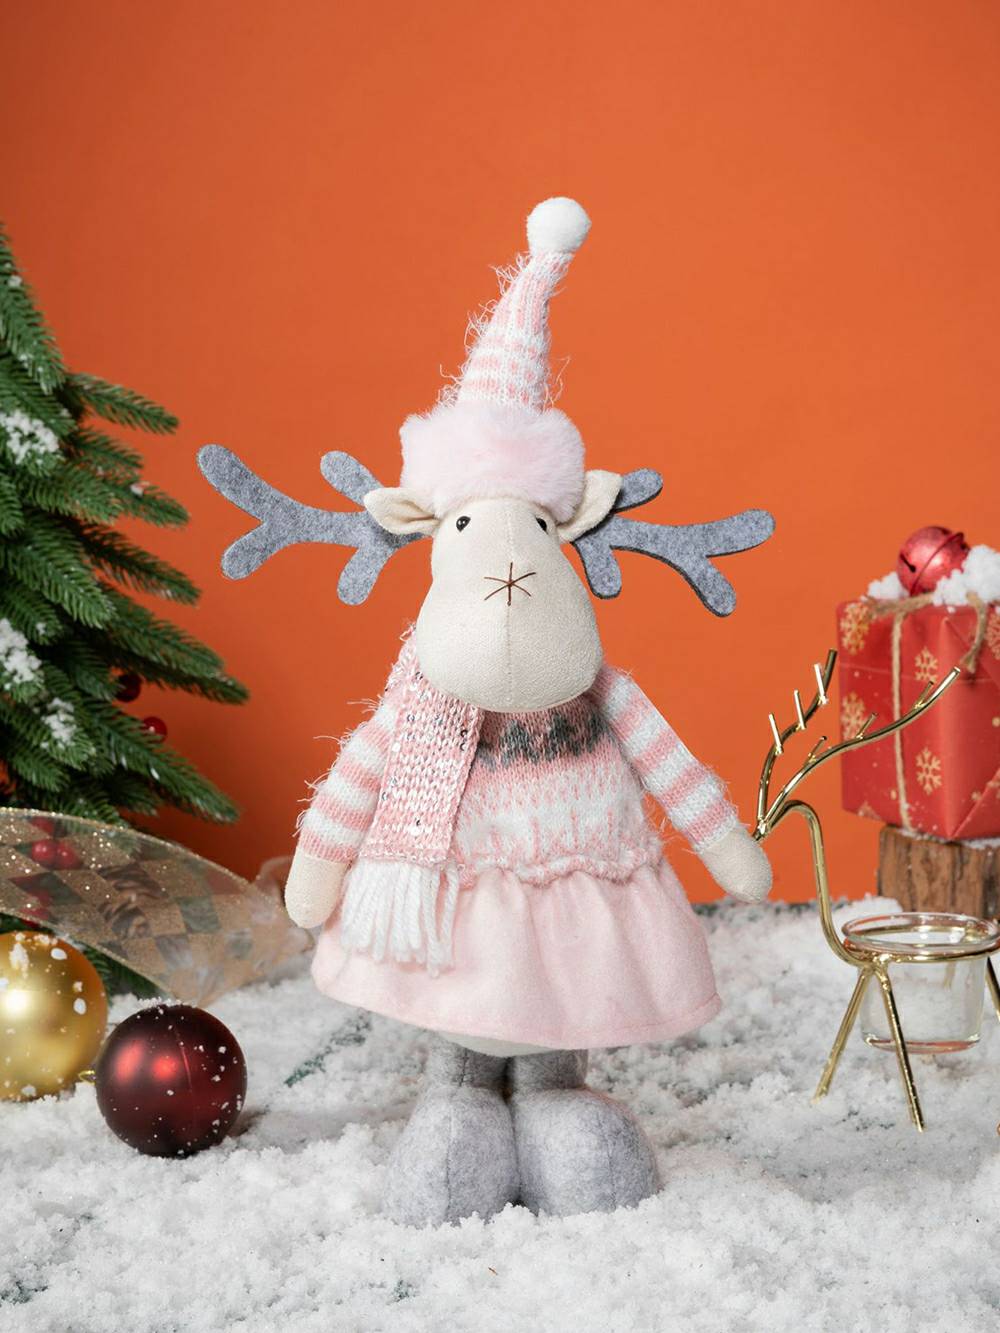 Barbie natalizia in peluche rosa con renna elfo e pupazzo di neve Rudolph